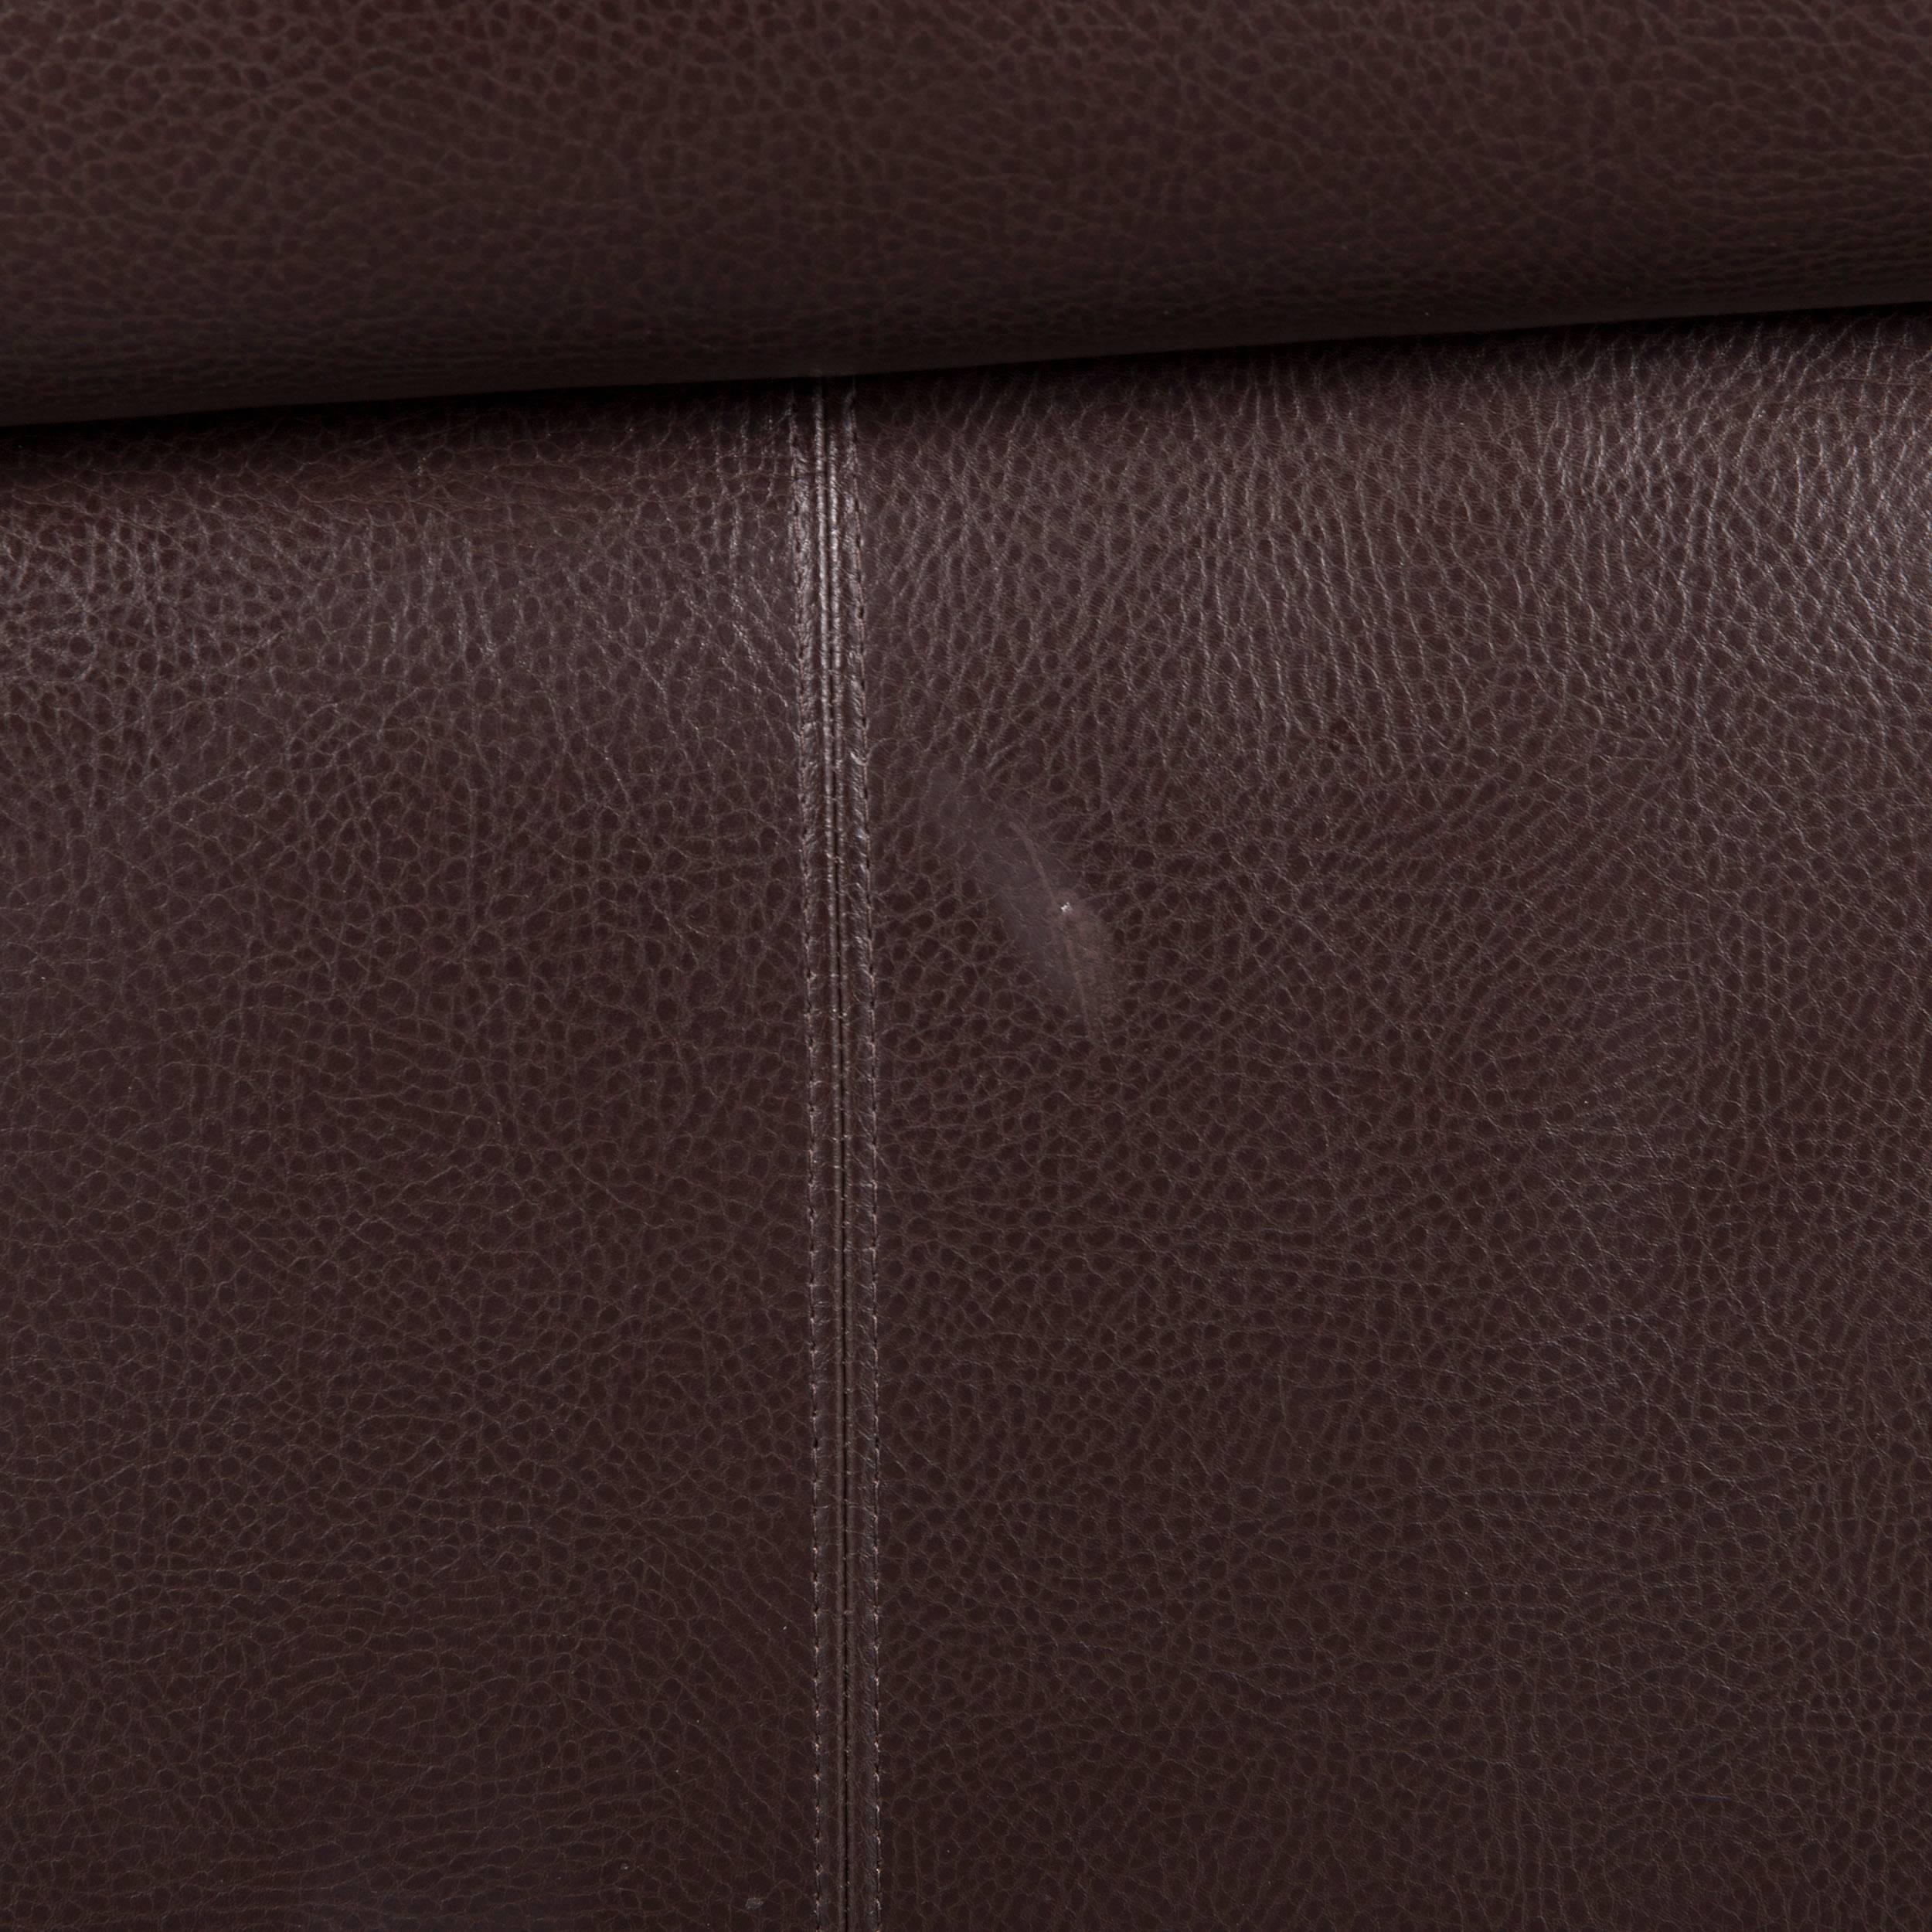 Machalke Sumatra Leather Sofa Set Brown Two-Seat and Armchair 11